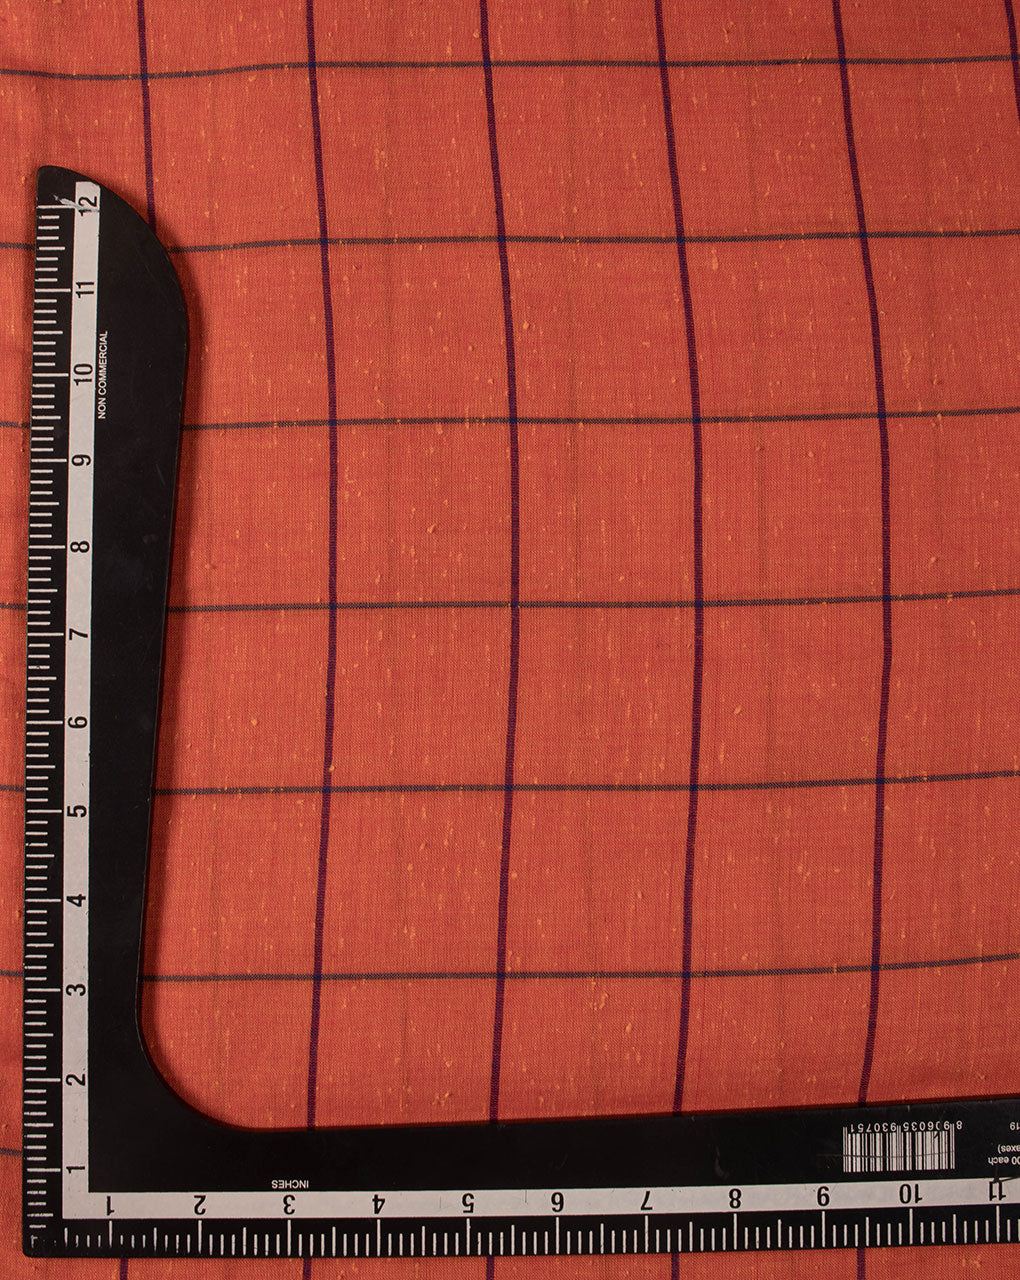 Woven Loom Textured Cotton Fabric - Fabriclore.com